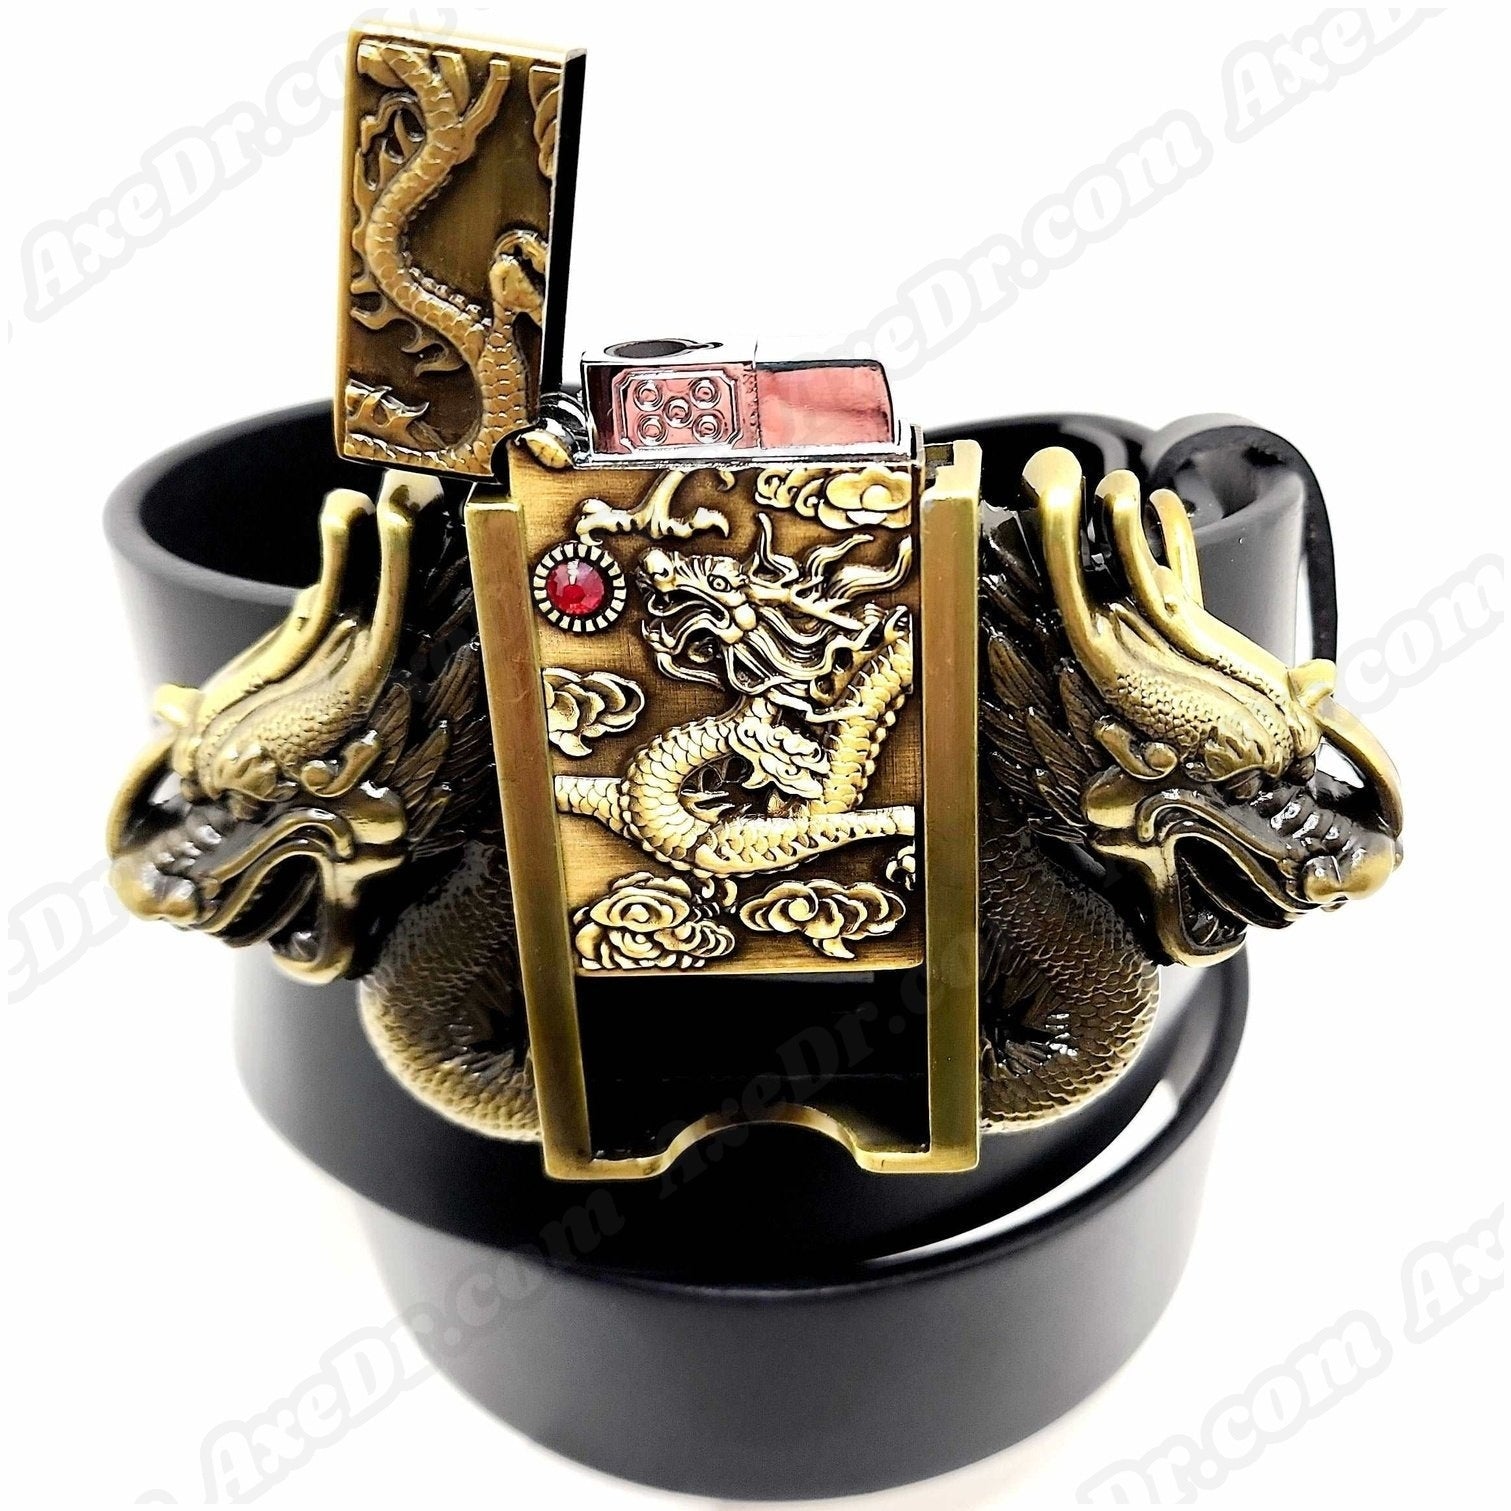 Dual Dragons Gold Lighter Belt Buckle and Genuine Leather Belt shop.AxeDr.com Buckles with Belt, Genuine Leather